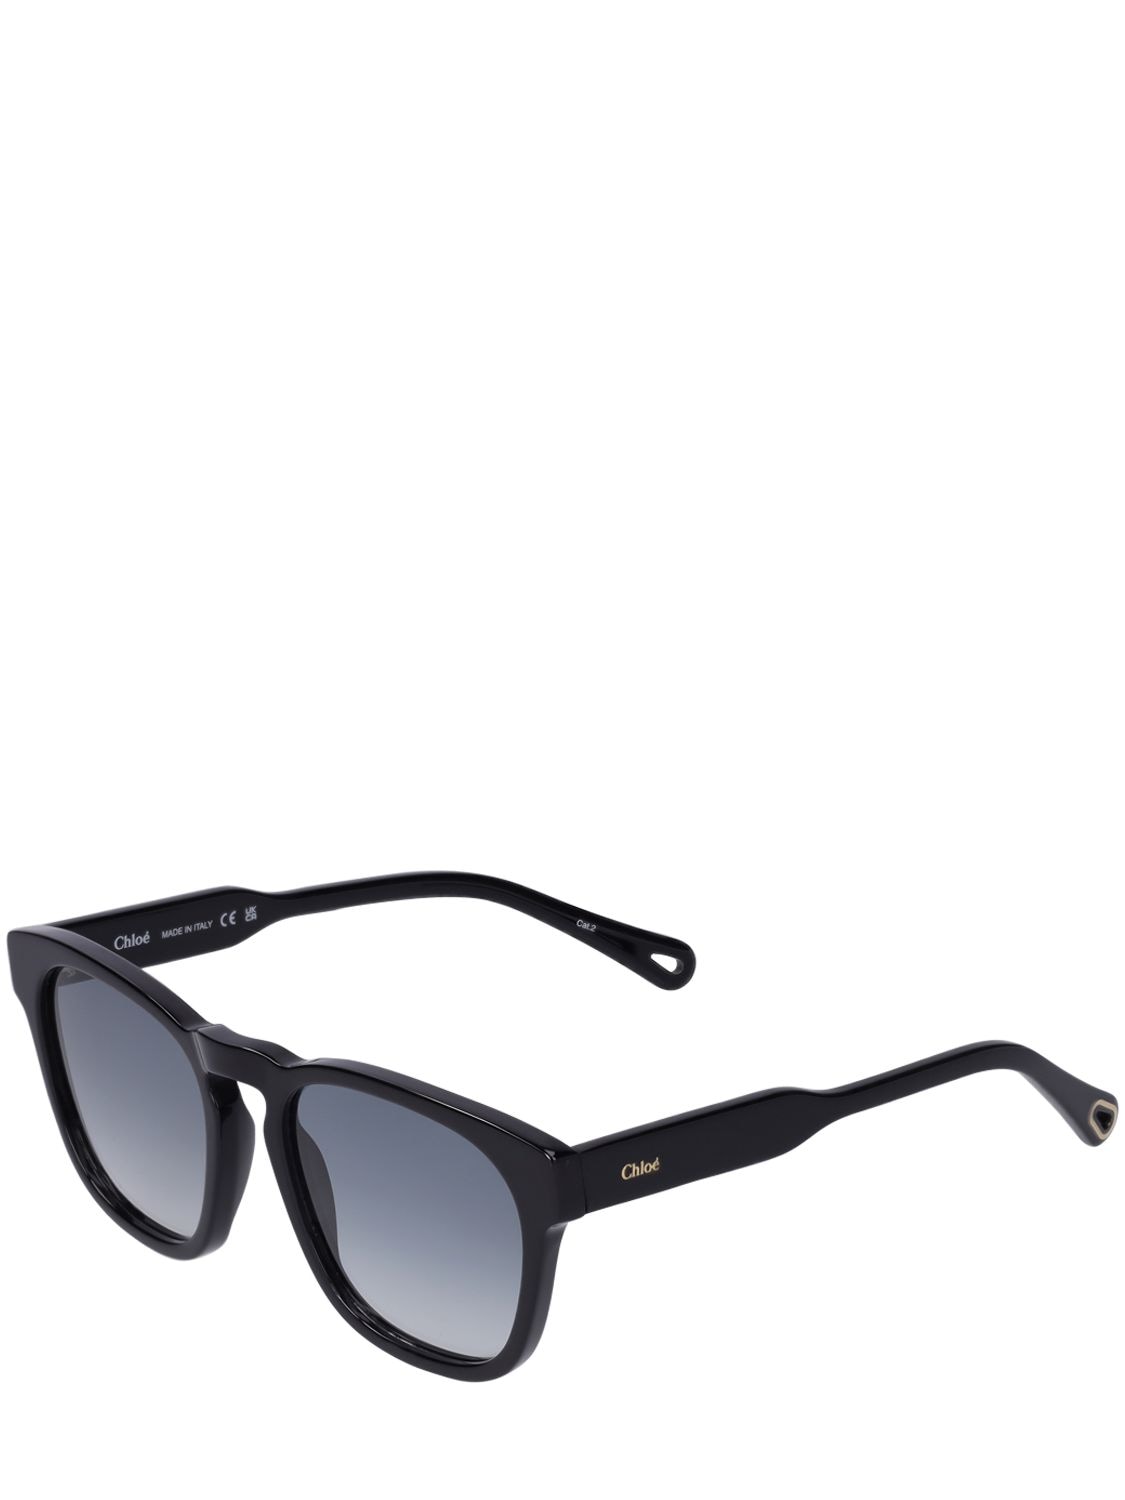 Chloé Xena Sunglasses Women's Black Size Onesize 100% Acetate